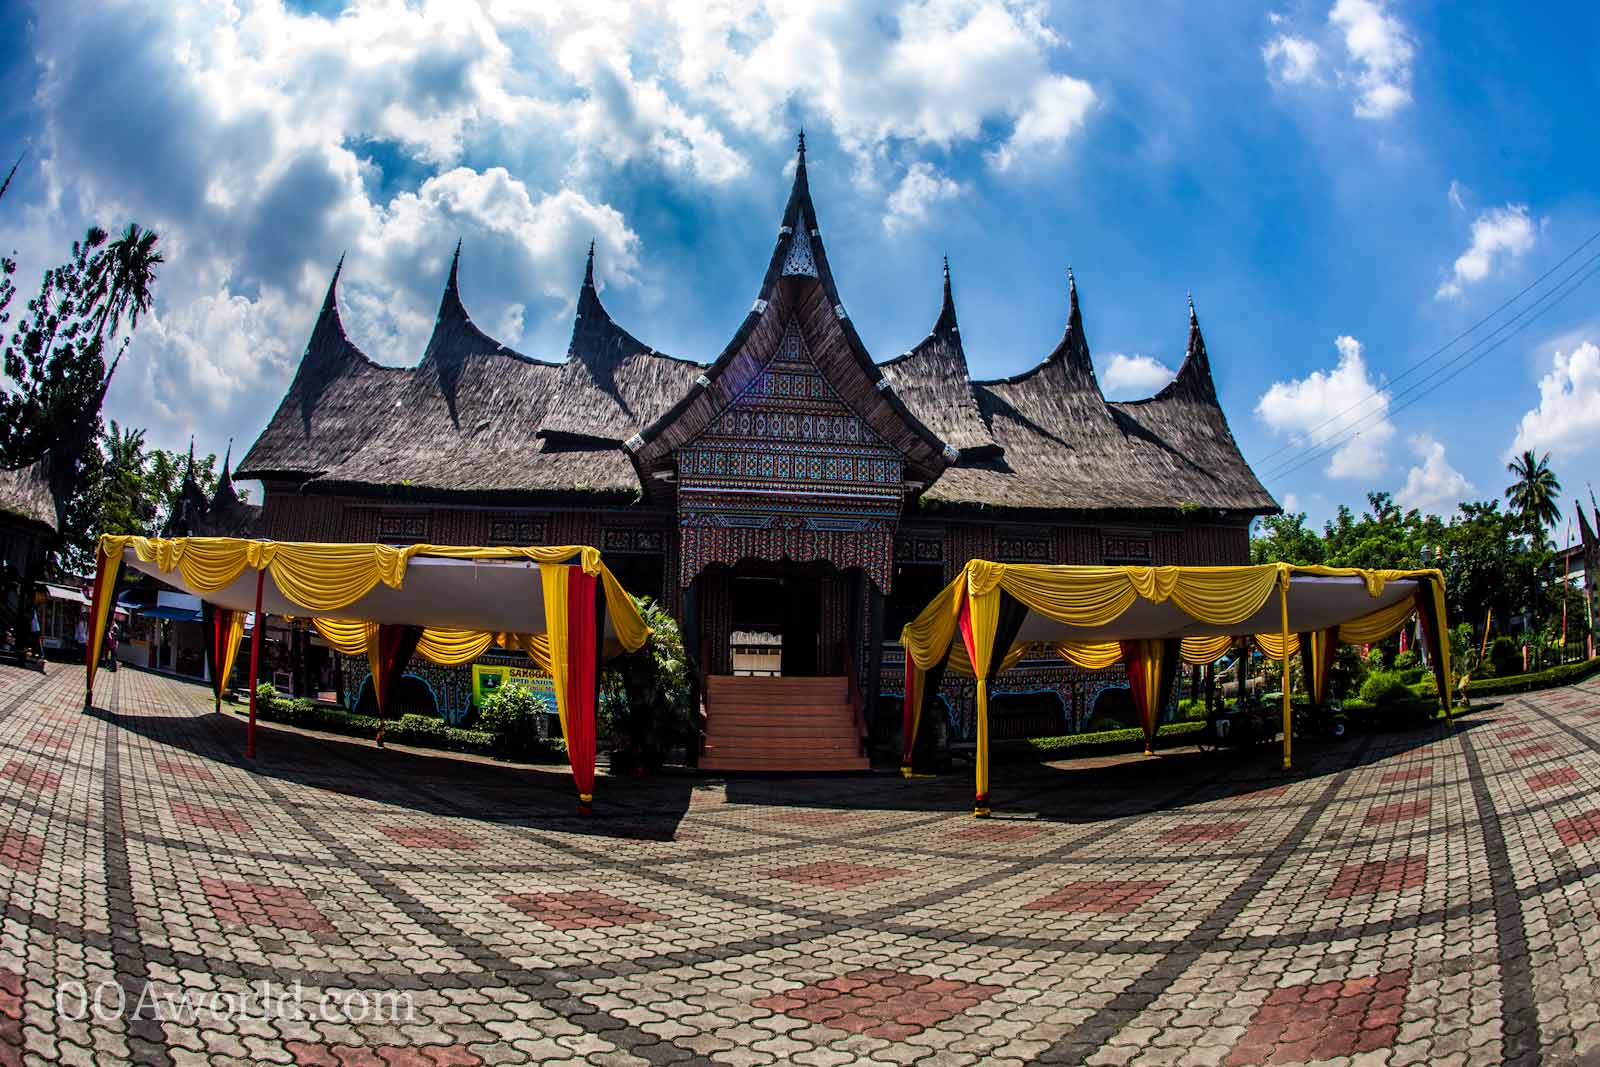 TMII Jakarta Video, Taman Mini Indonesia Indah, Beautiful Indonesia